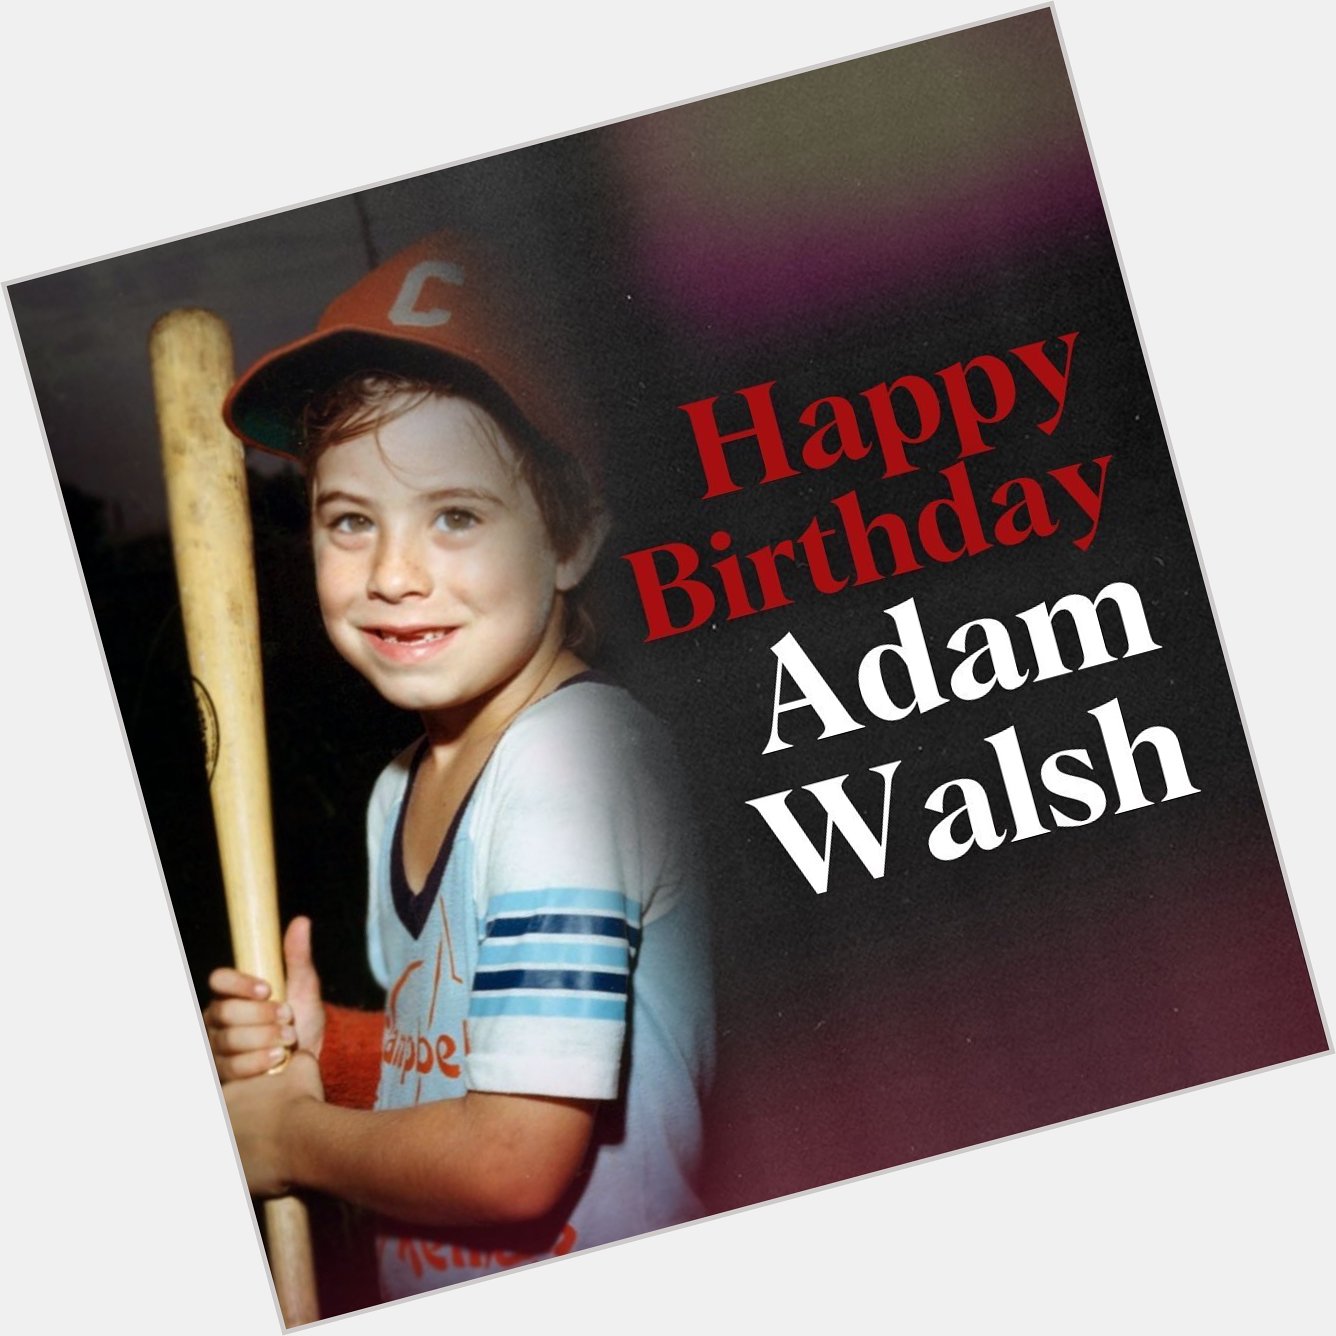 Happy birthday, Adam Walsh 